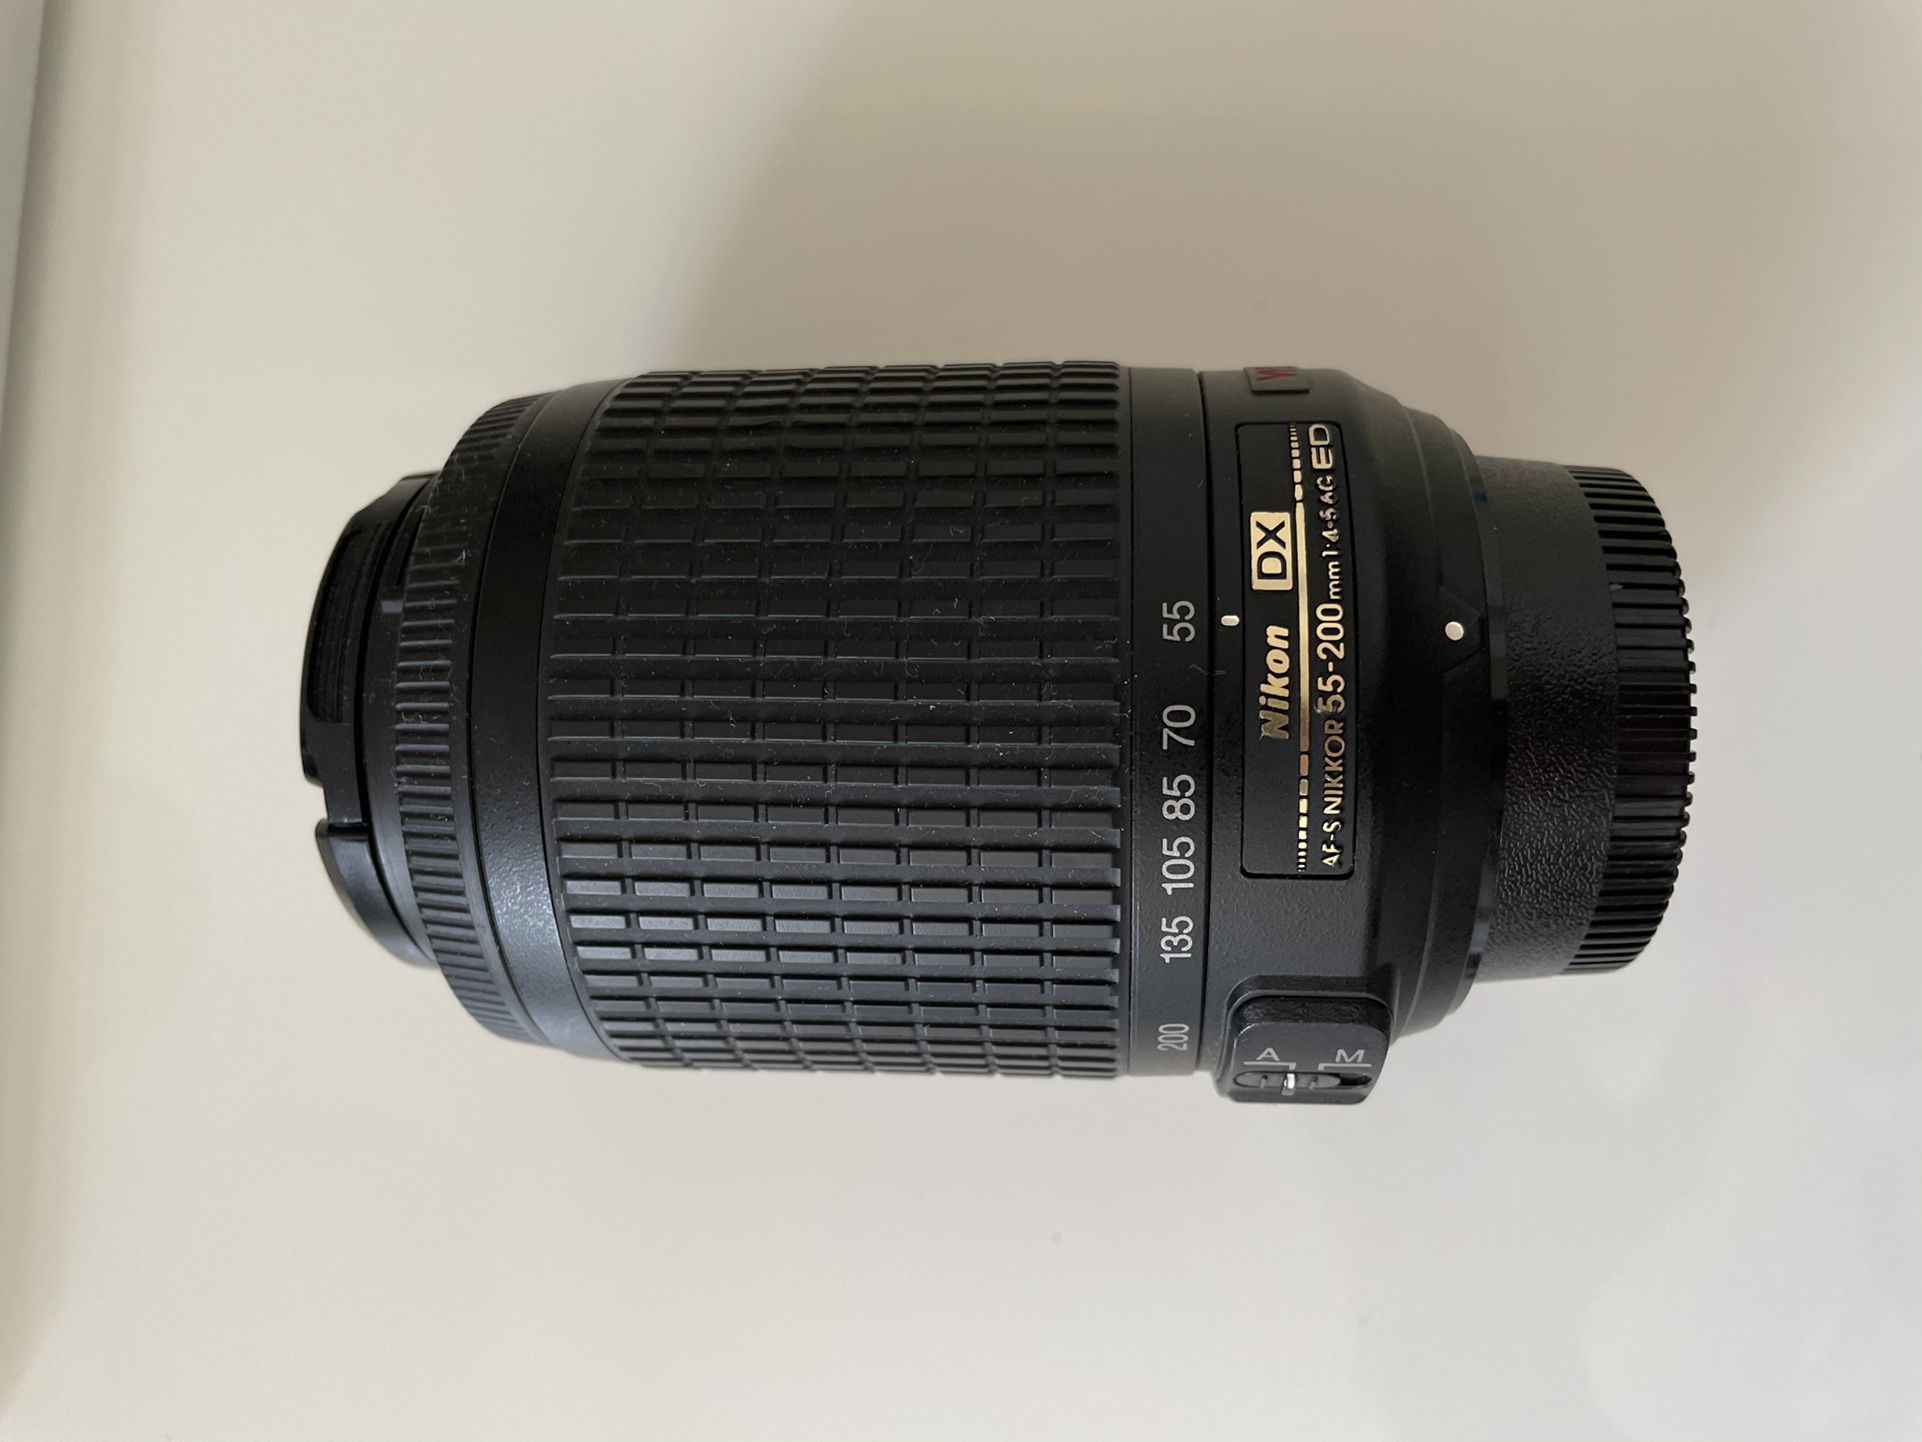 Nikon 55-200mm DX Lens